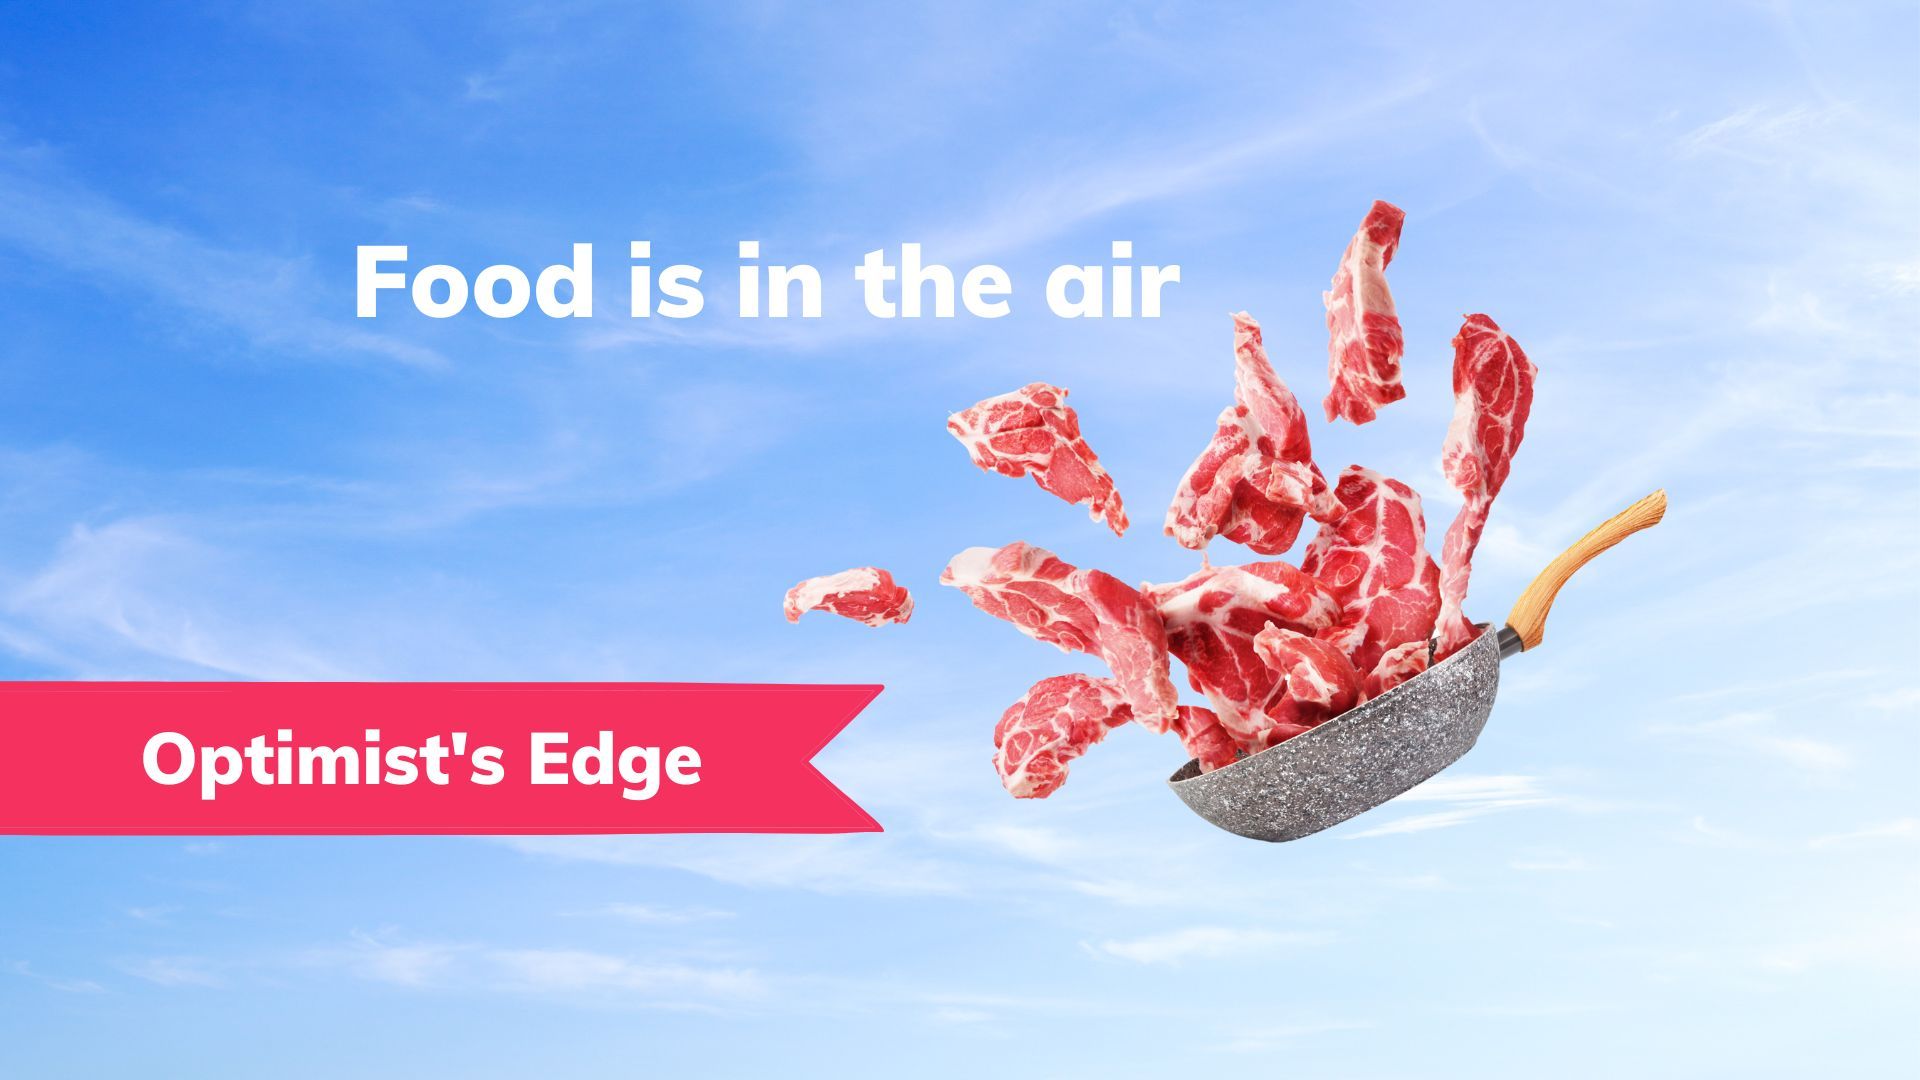 💡 Optimist's Edge: Food from air